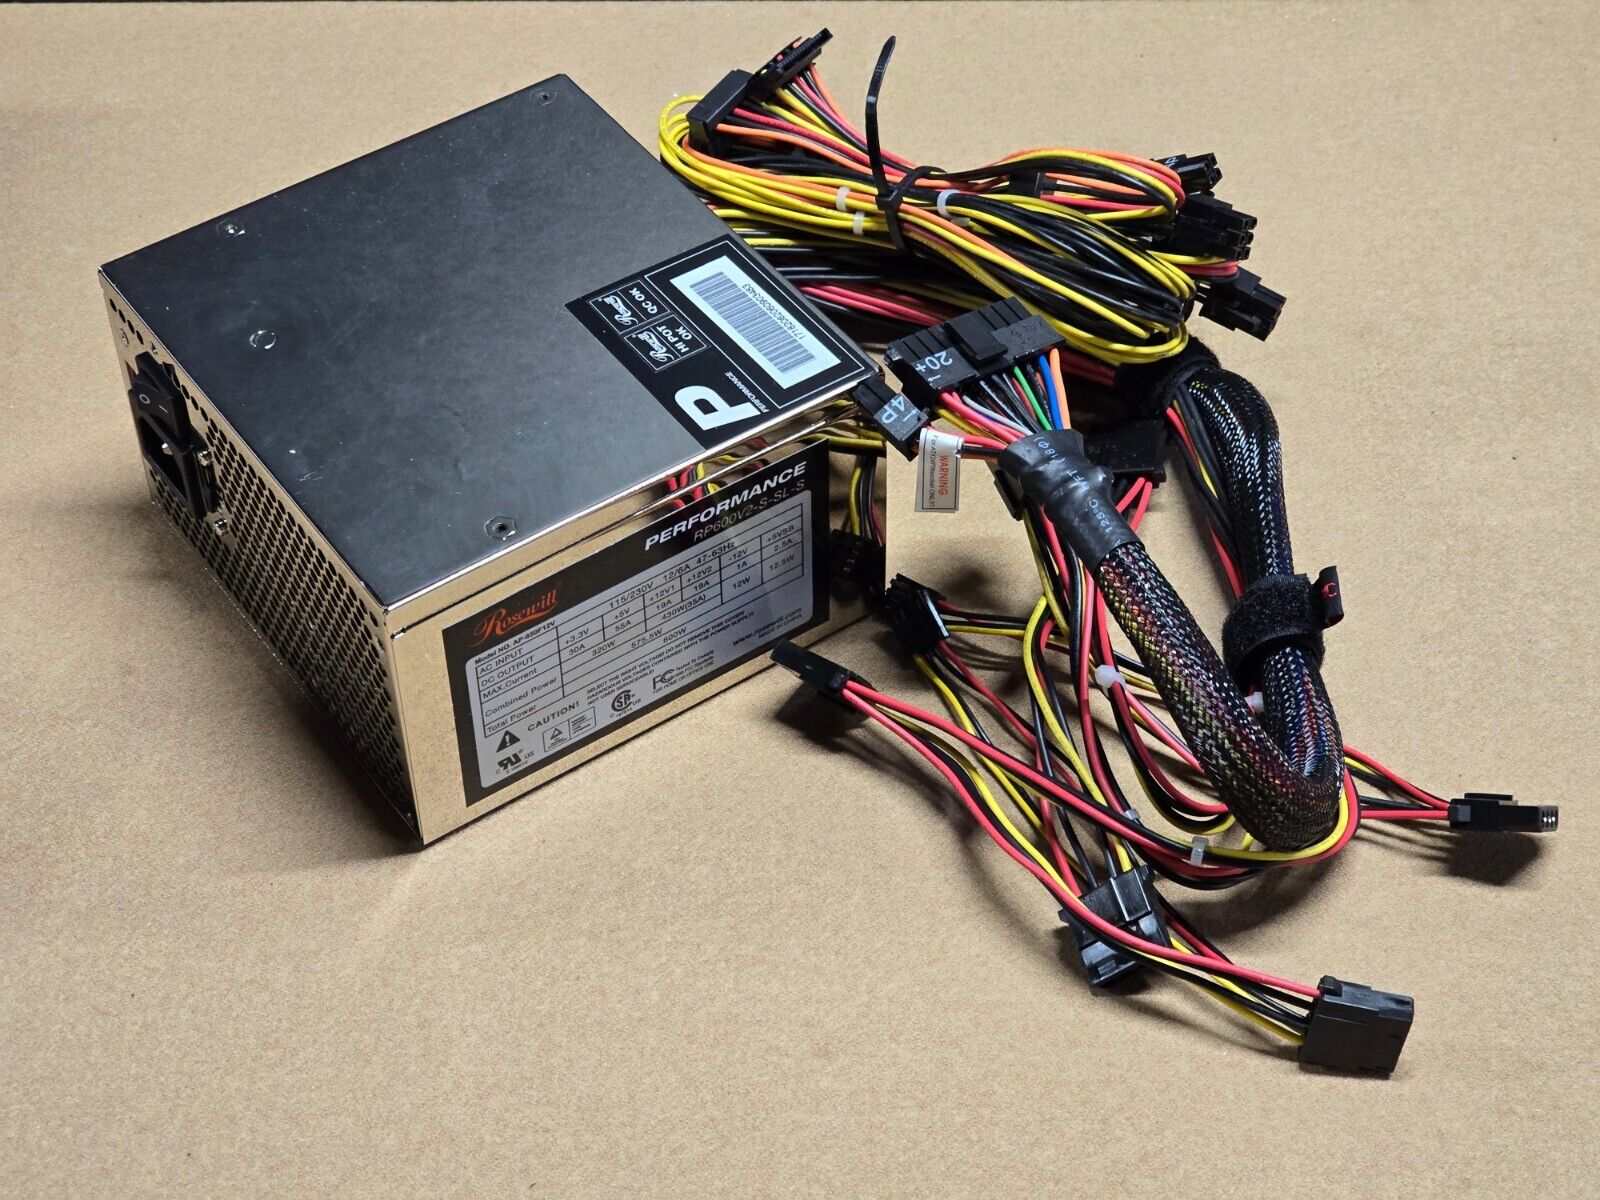 Rosewill RP600V2-S-SL-S 600W ATX12V v2.01 SLI Ready Power Supply( open box)